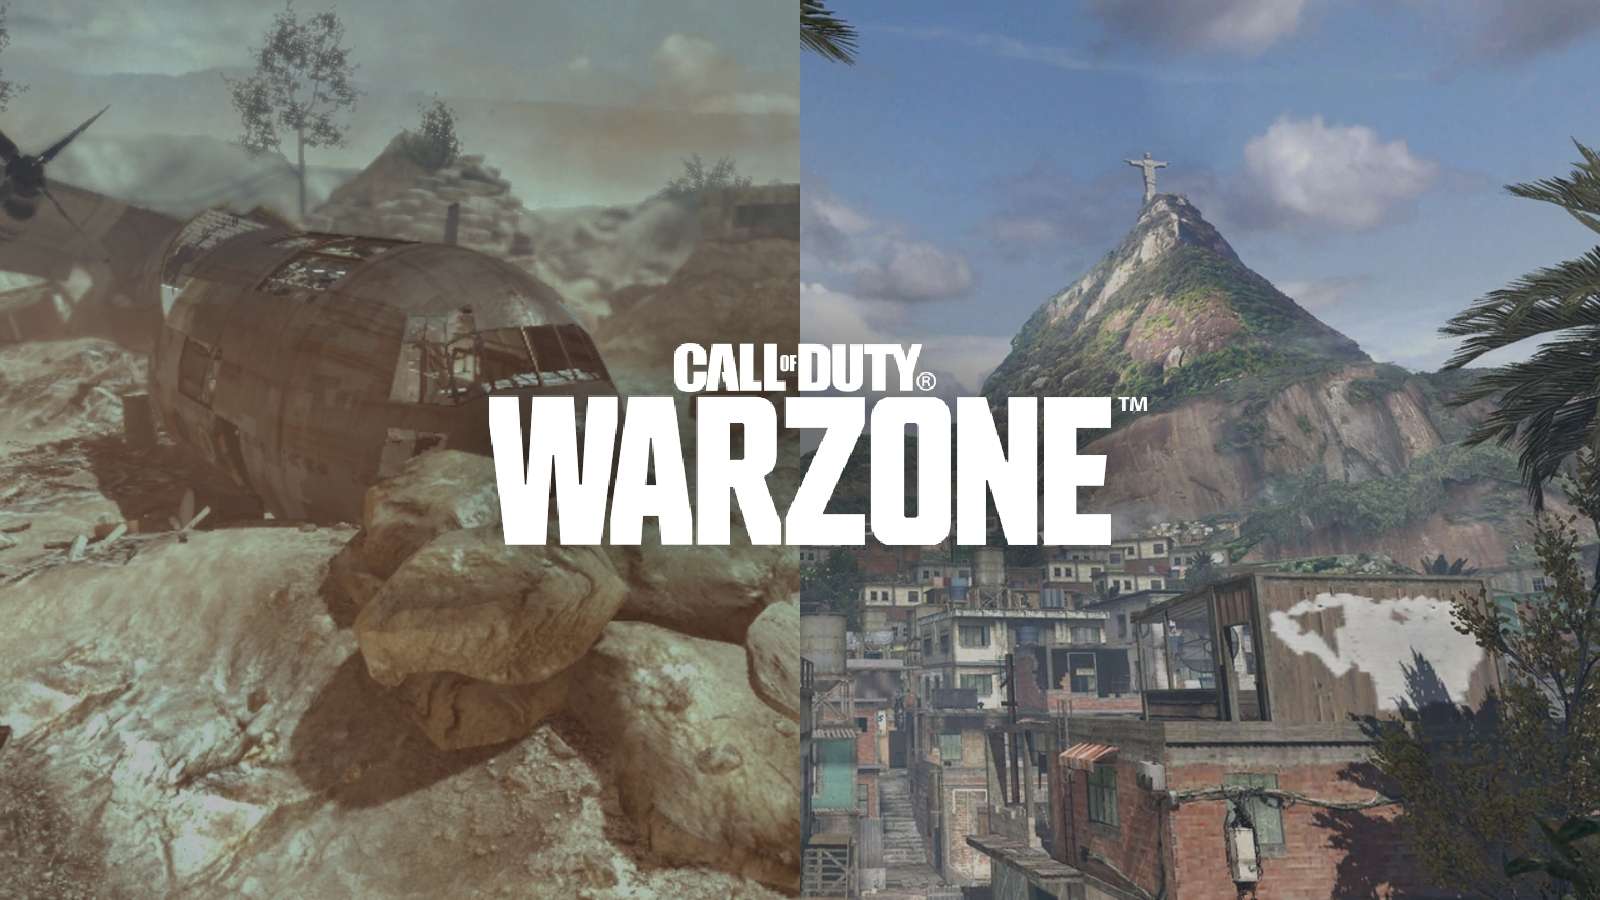 Warzone logo on Modern Warfare 2 maps Favela and Afghan